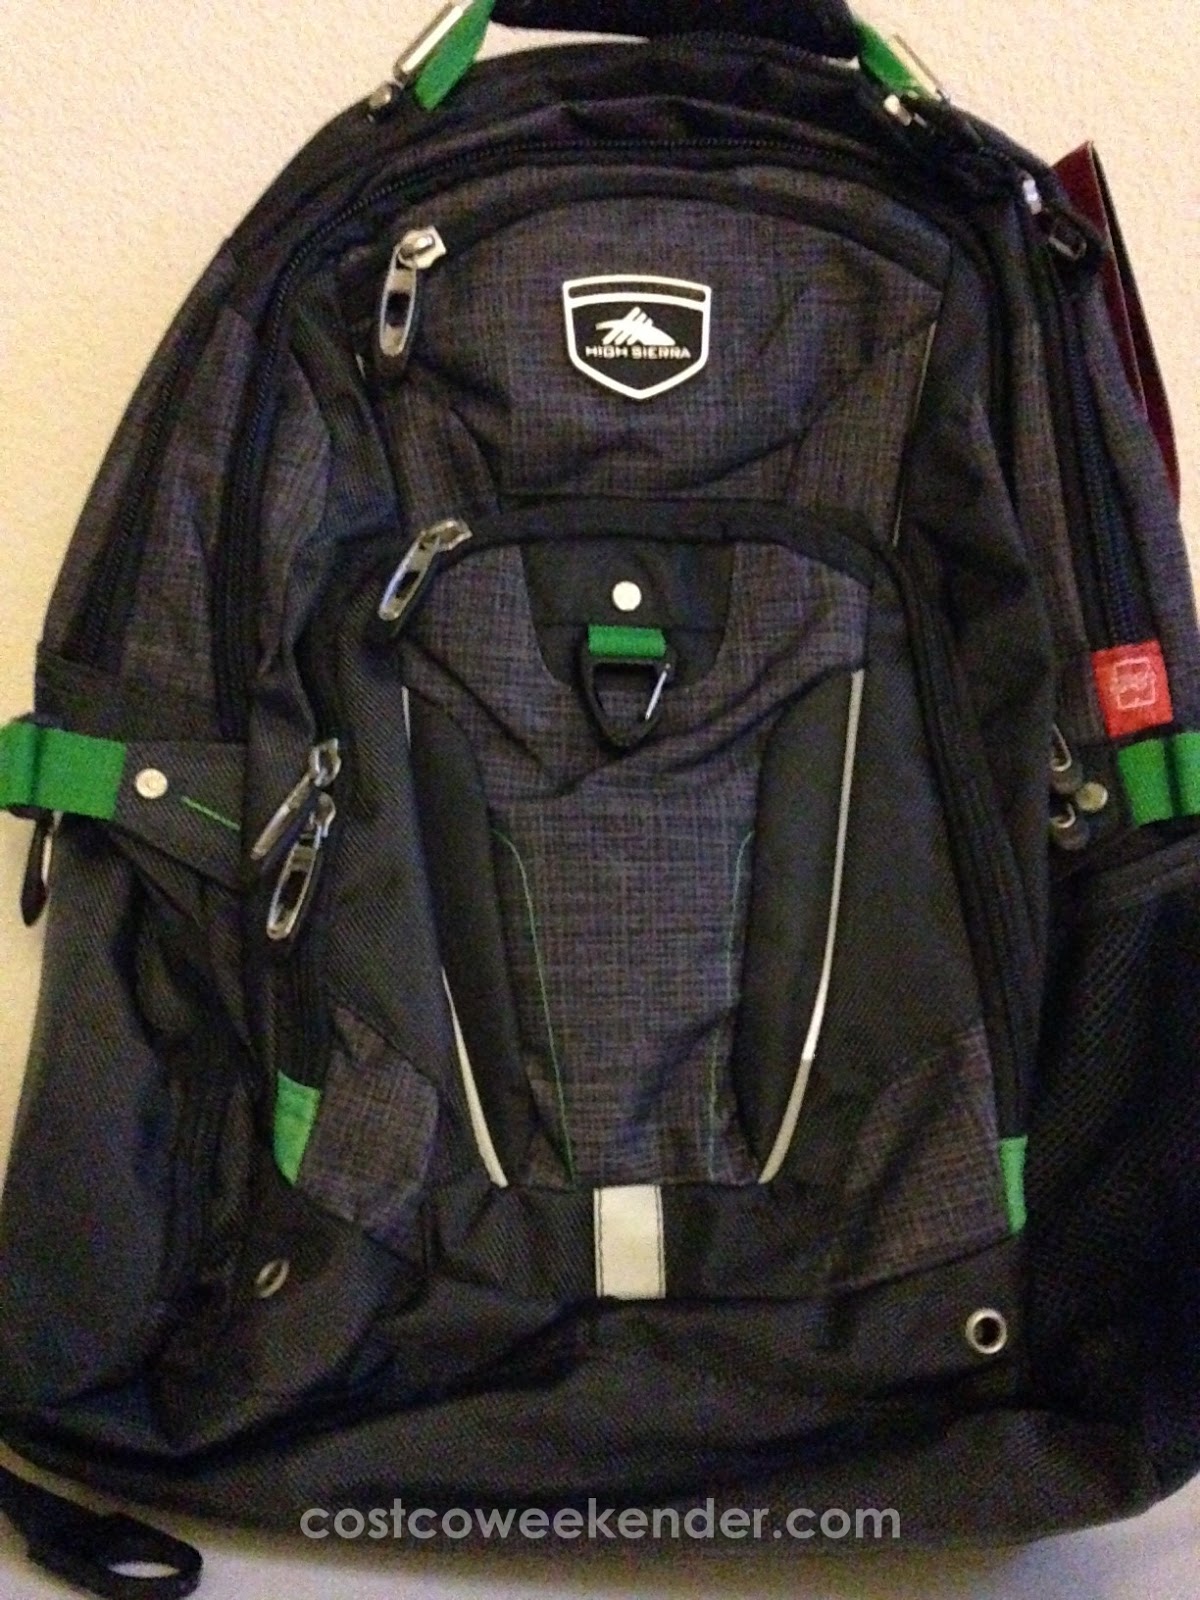 High Sierra CRAGIN Hydration Backpack - $19.97 #costco #clearance